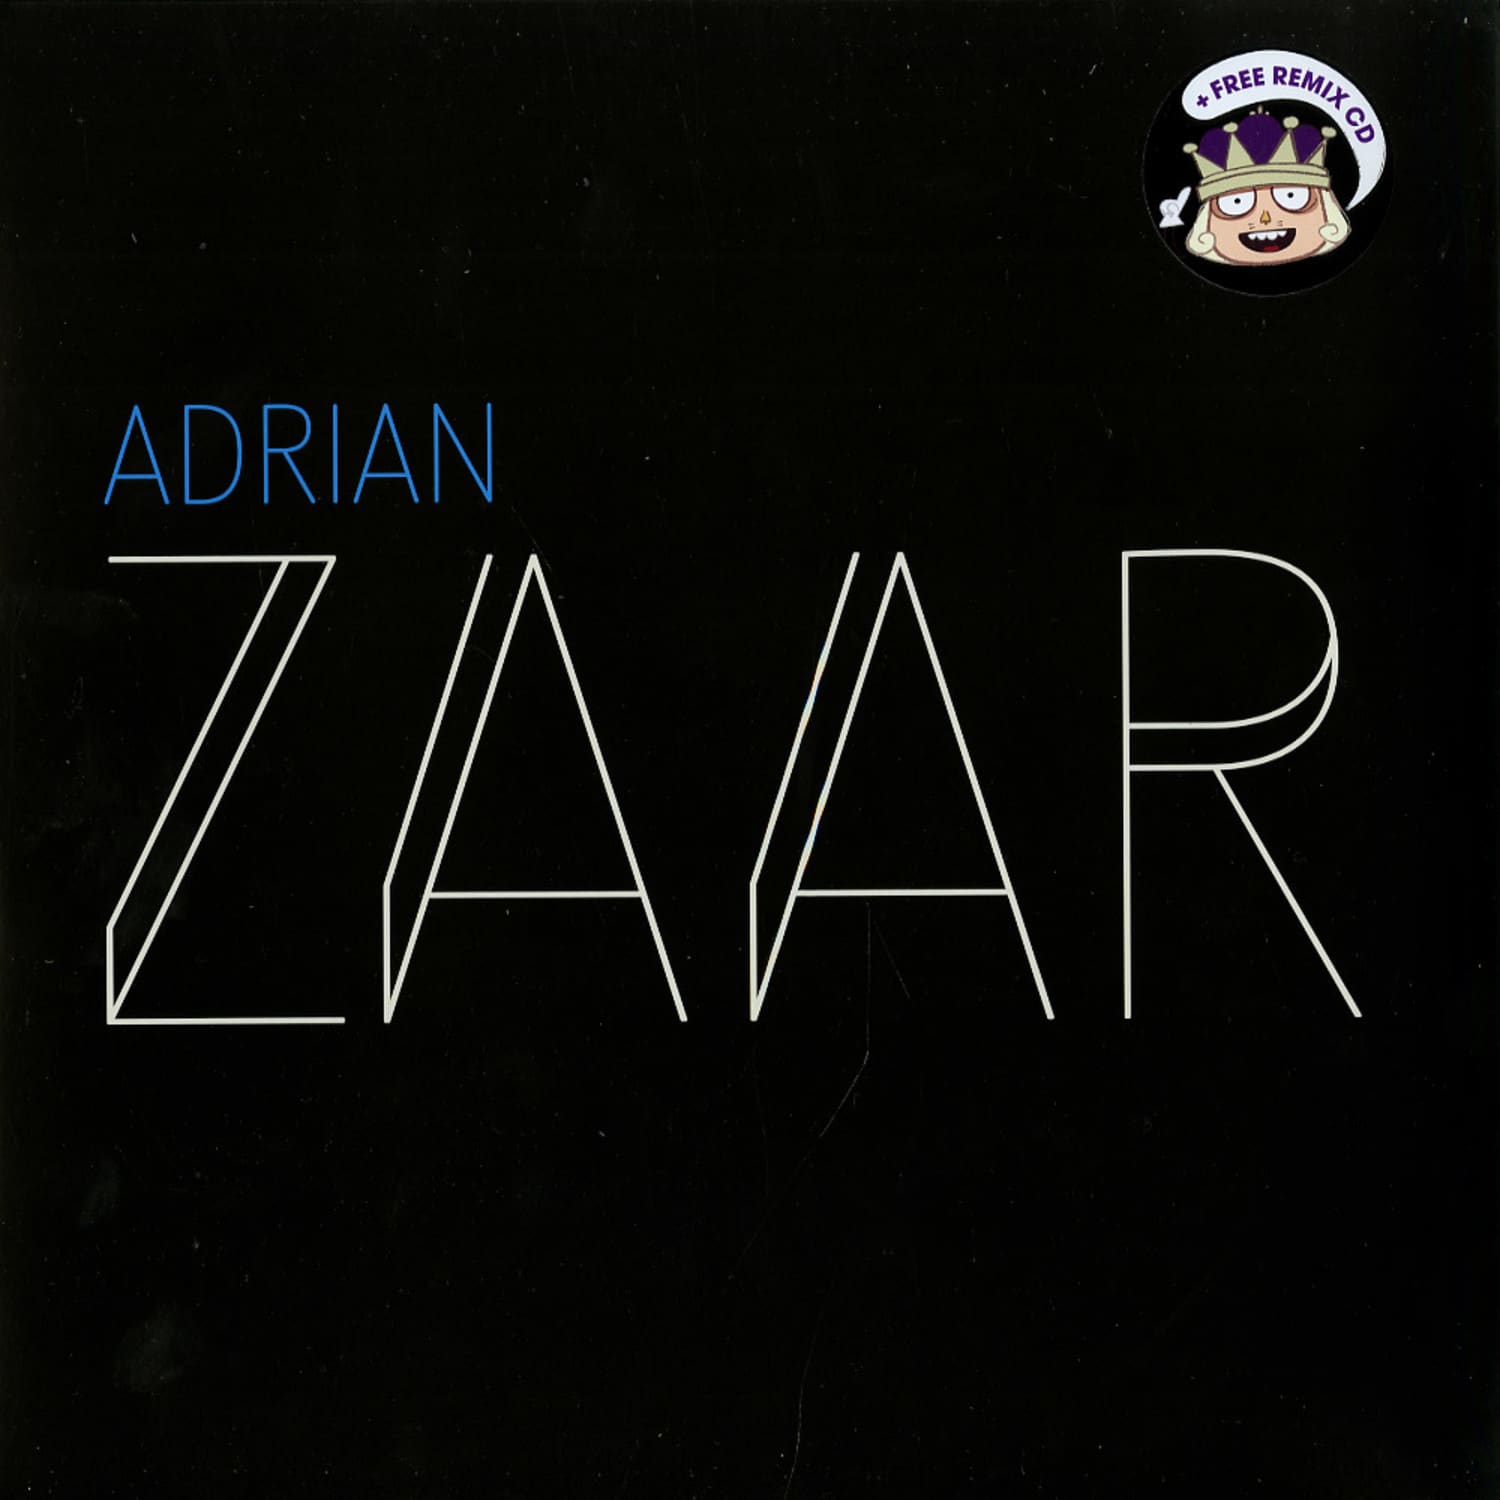 Adrian Zaar - ADRIAN ZAAR 